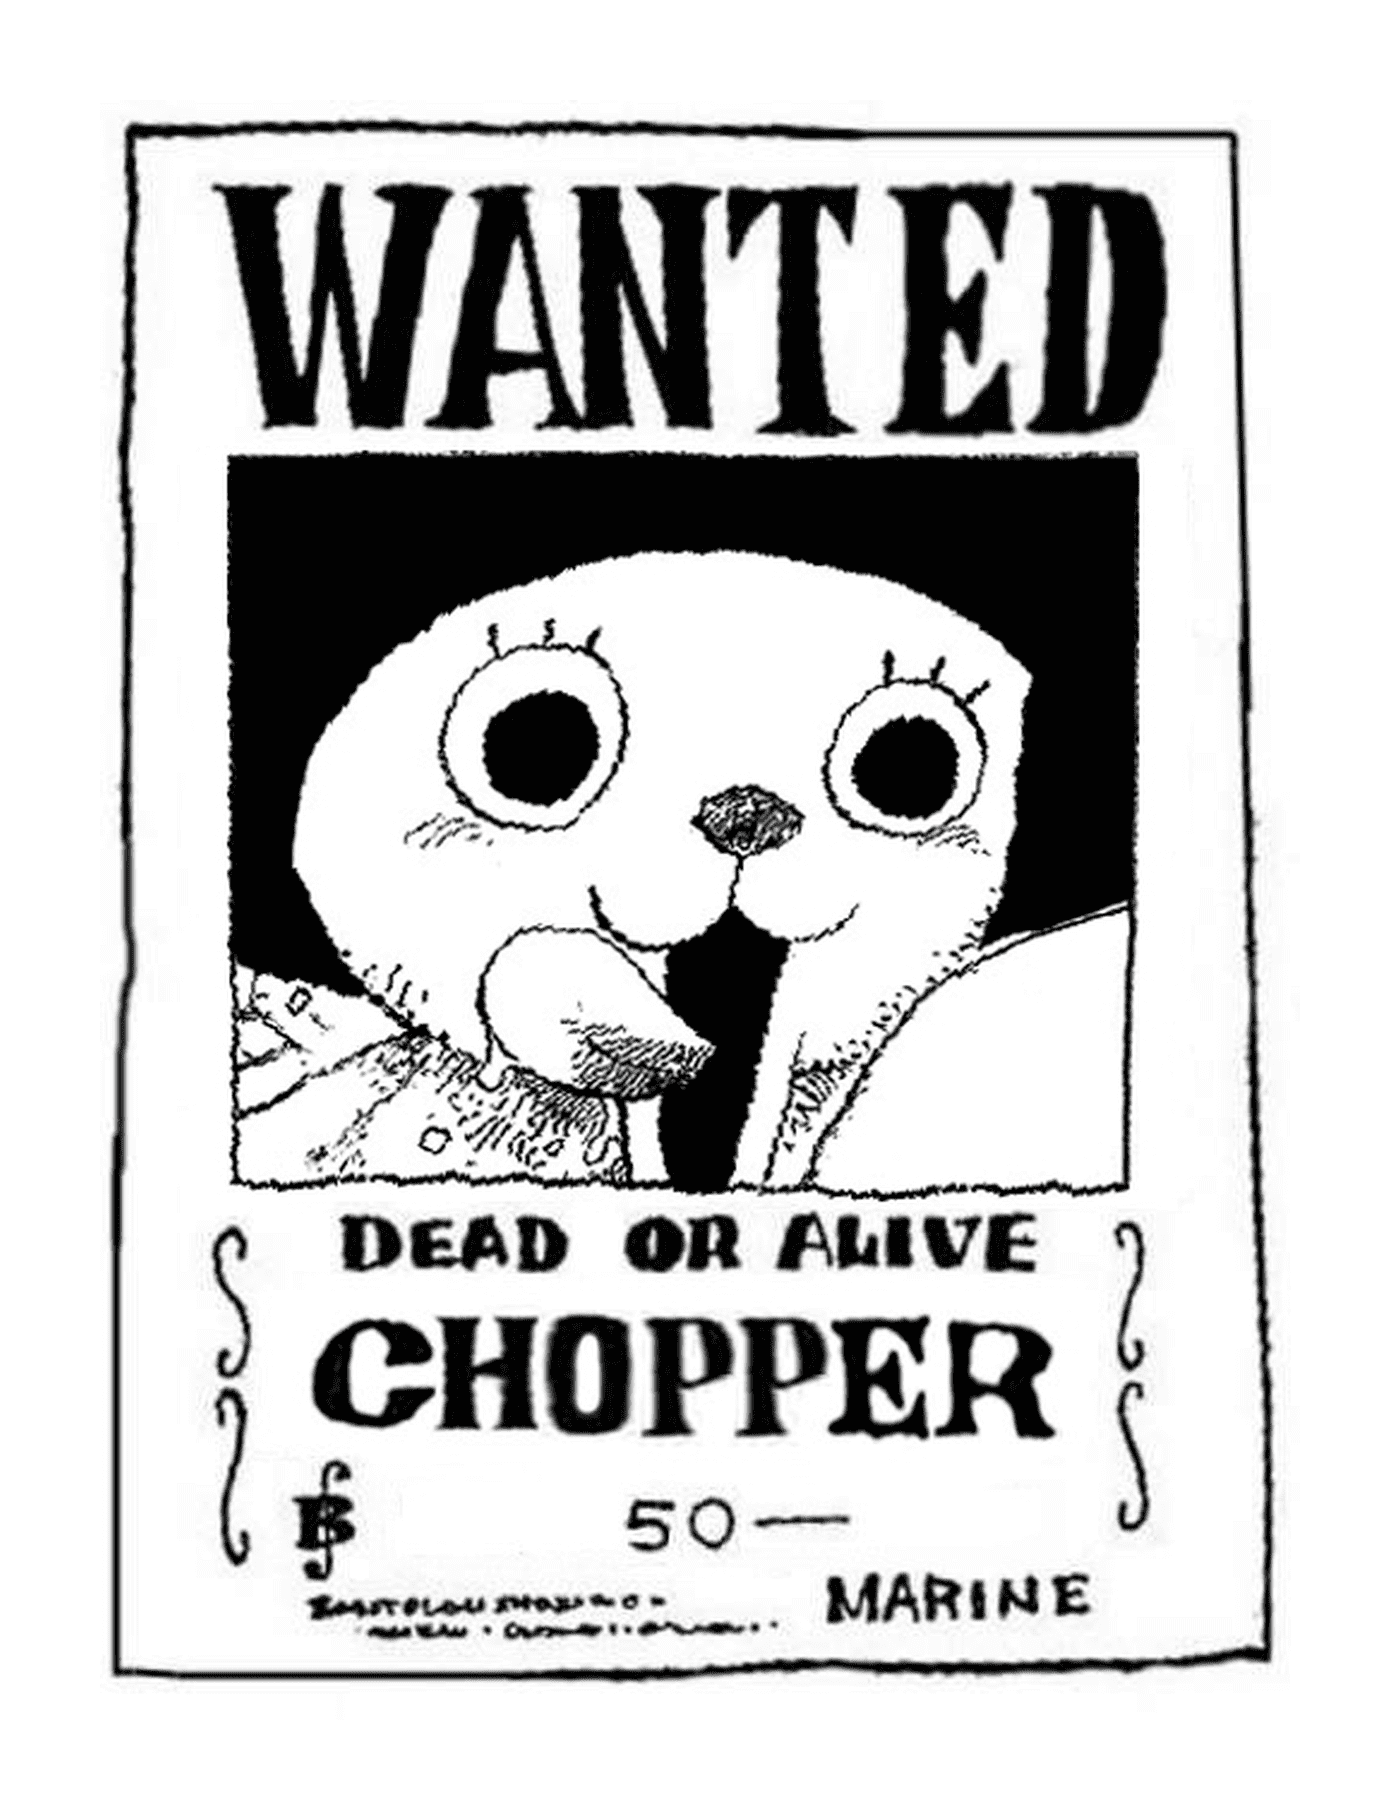  Buscado Chopper, vivo o muerto 